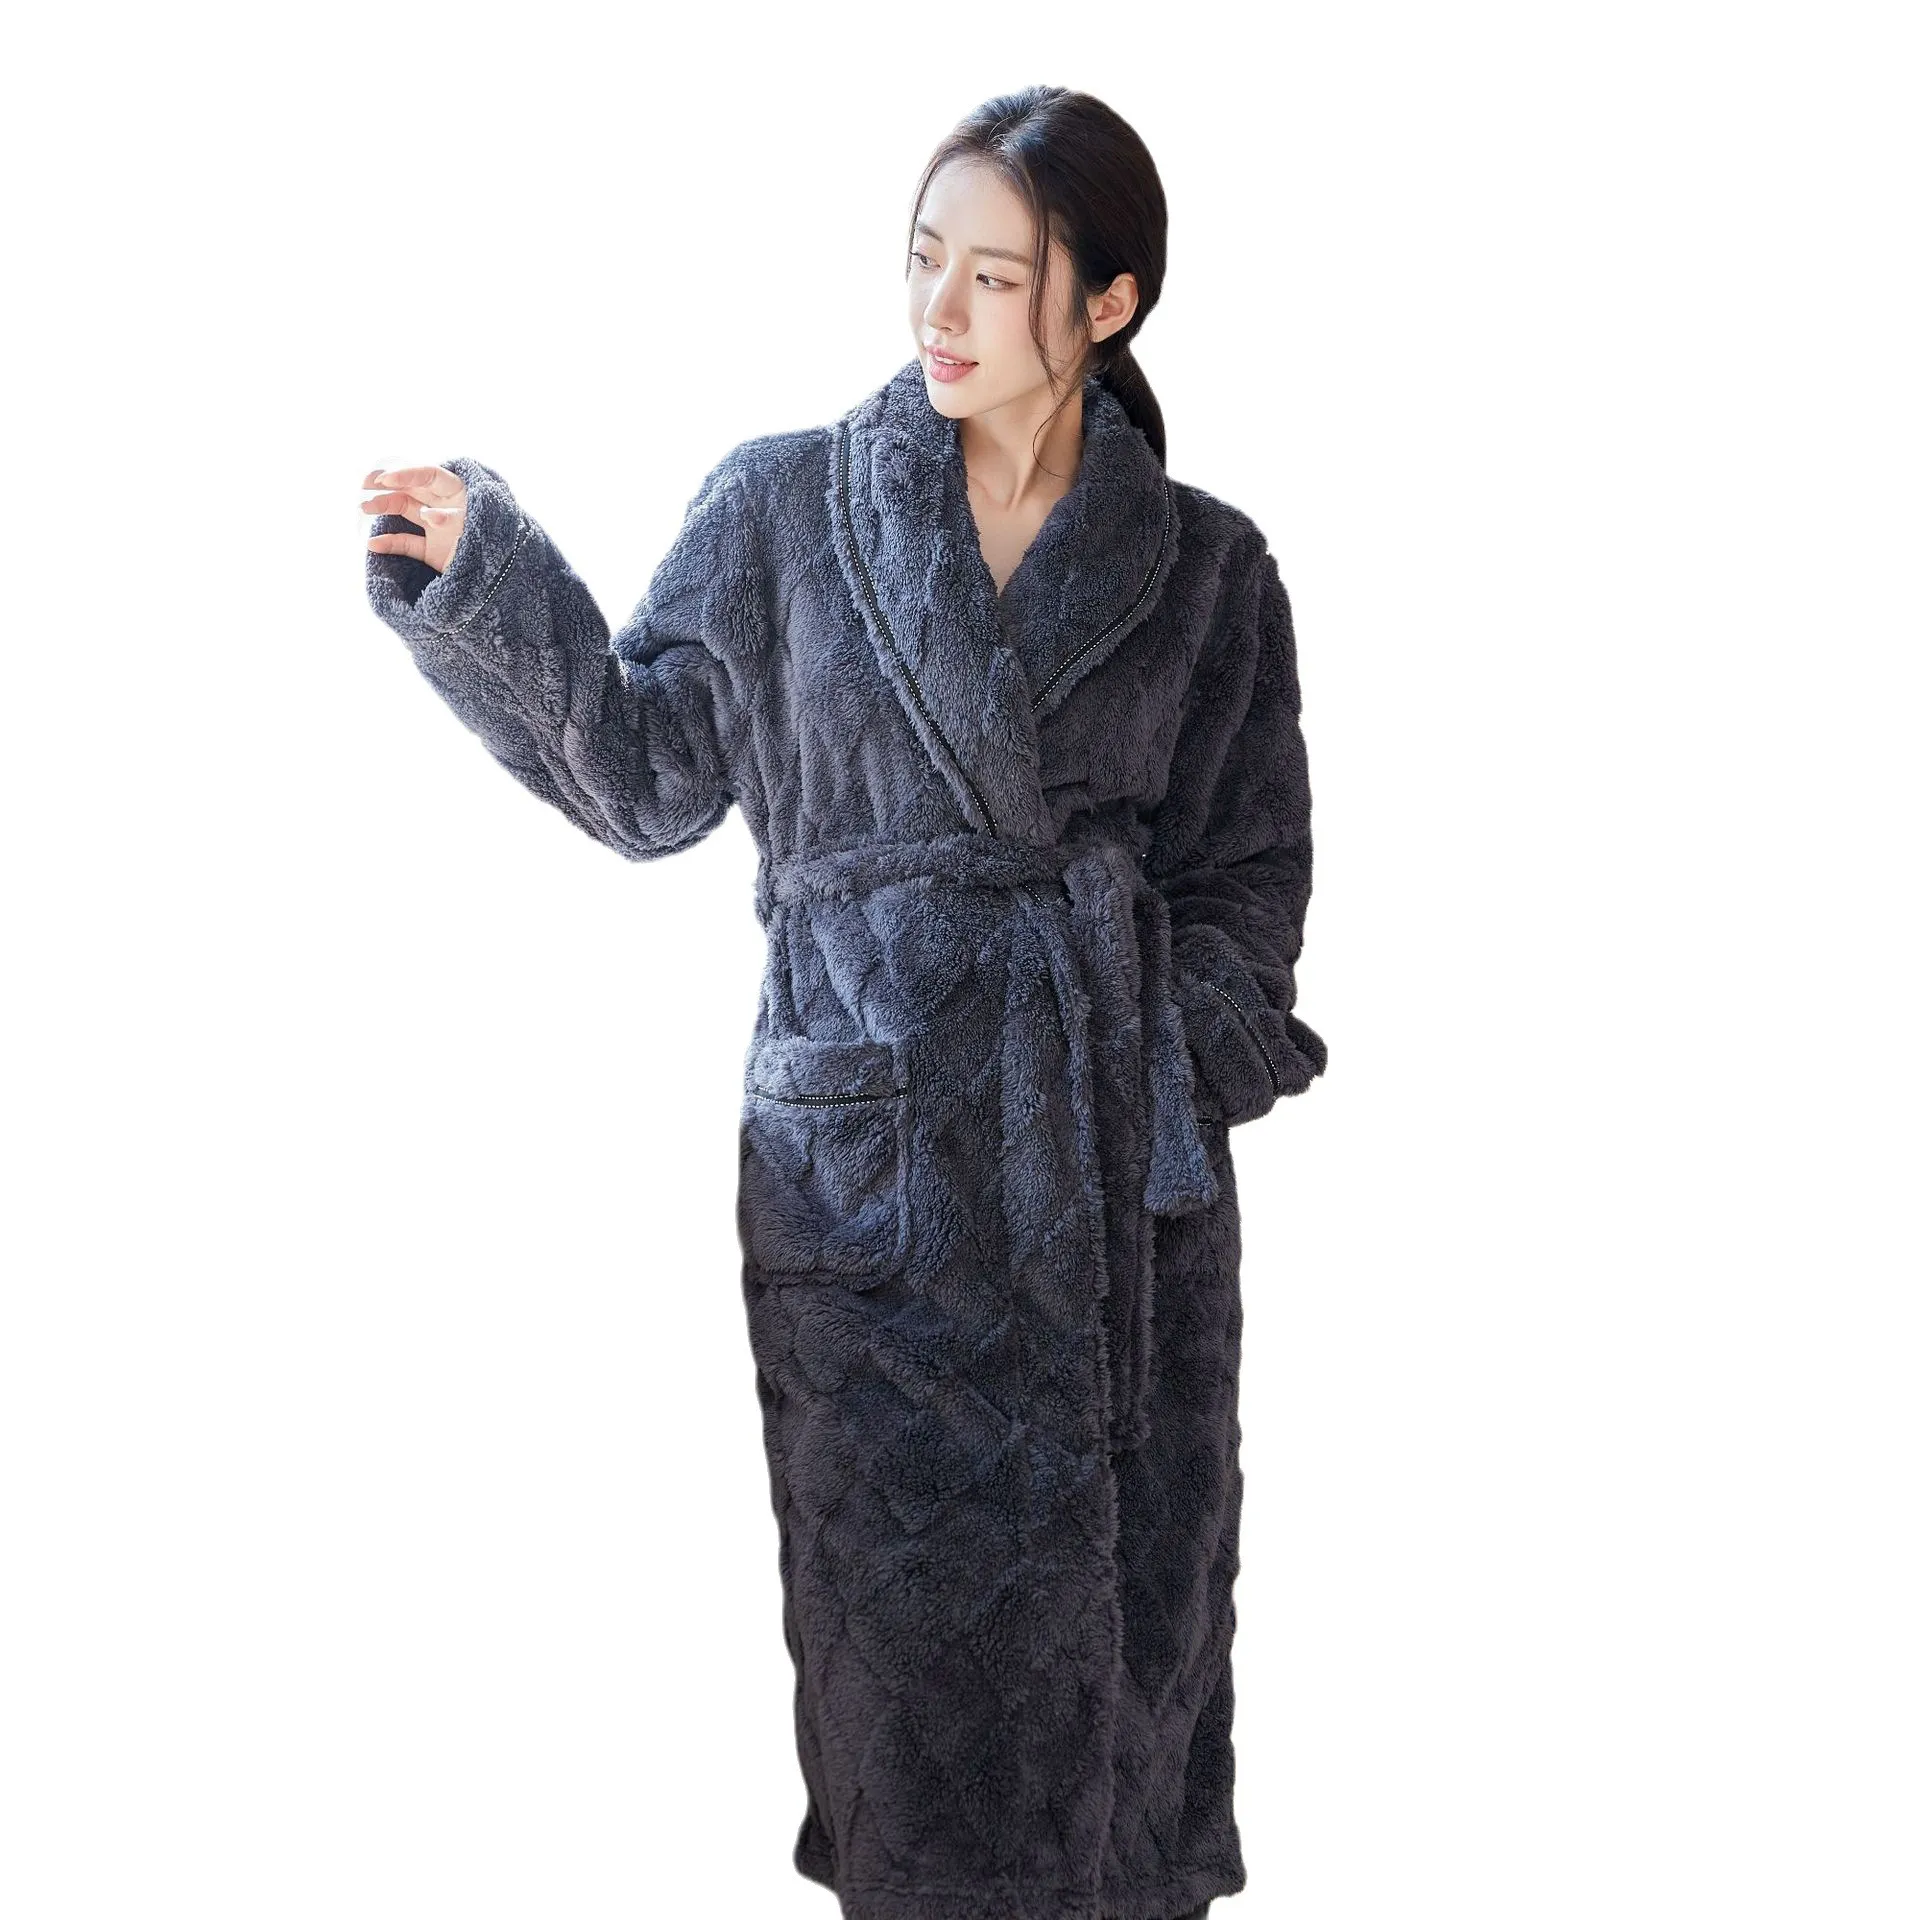 Autumn and winter new long sleeve robe lady diamond check jacquard cotton velvet warm bathrobe home suit